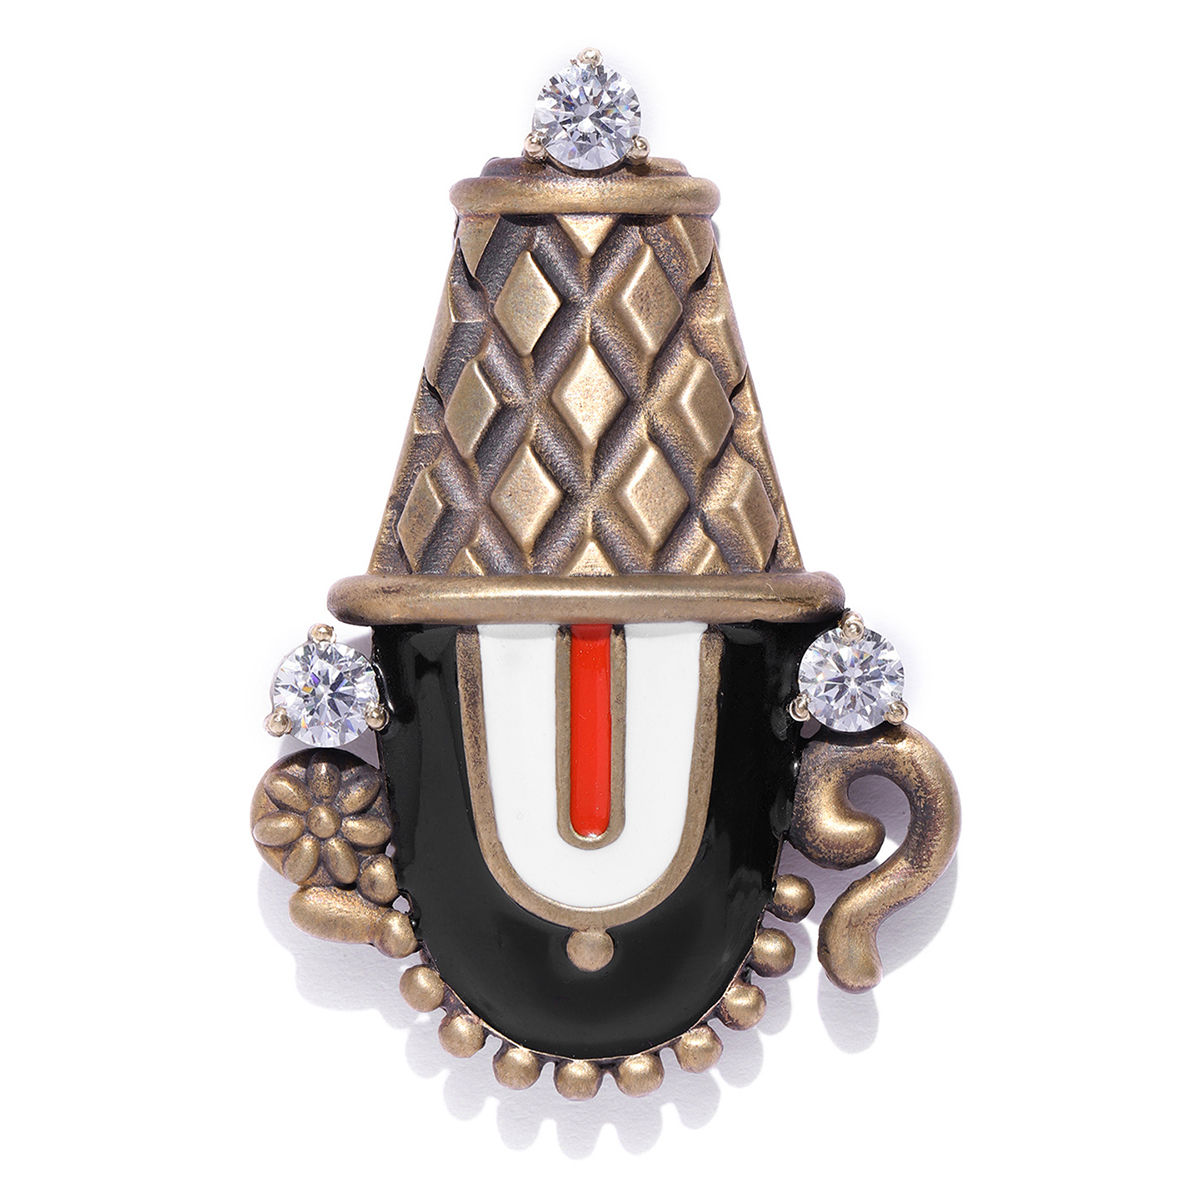 Buy 18Kt Gold Divine Diamond Balaji Ring 148VU7005 Online from Vaibhav  Jewellers